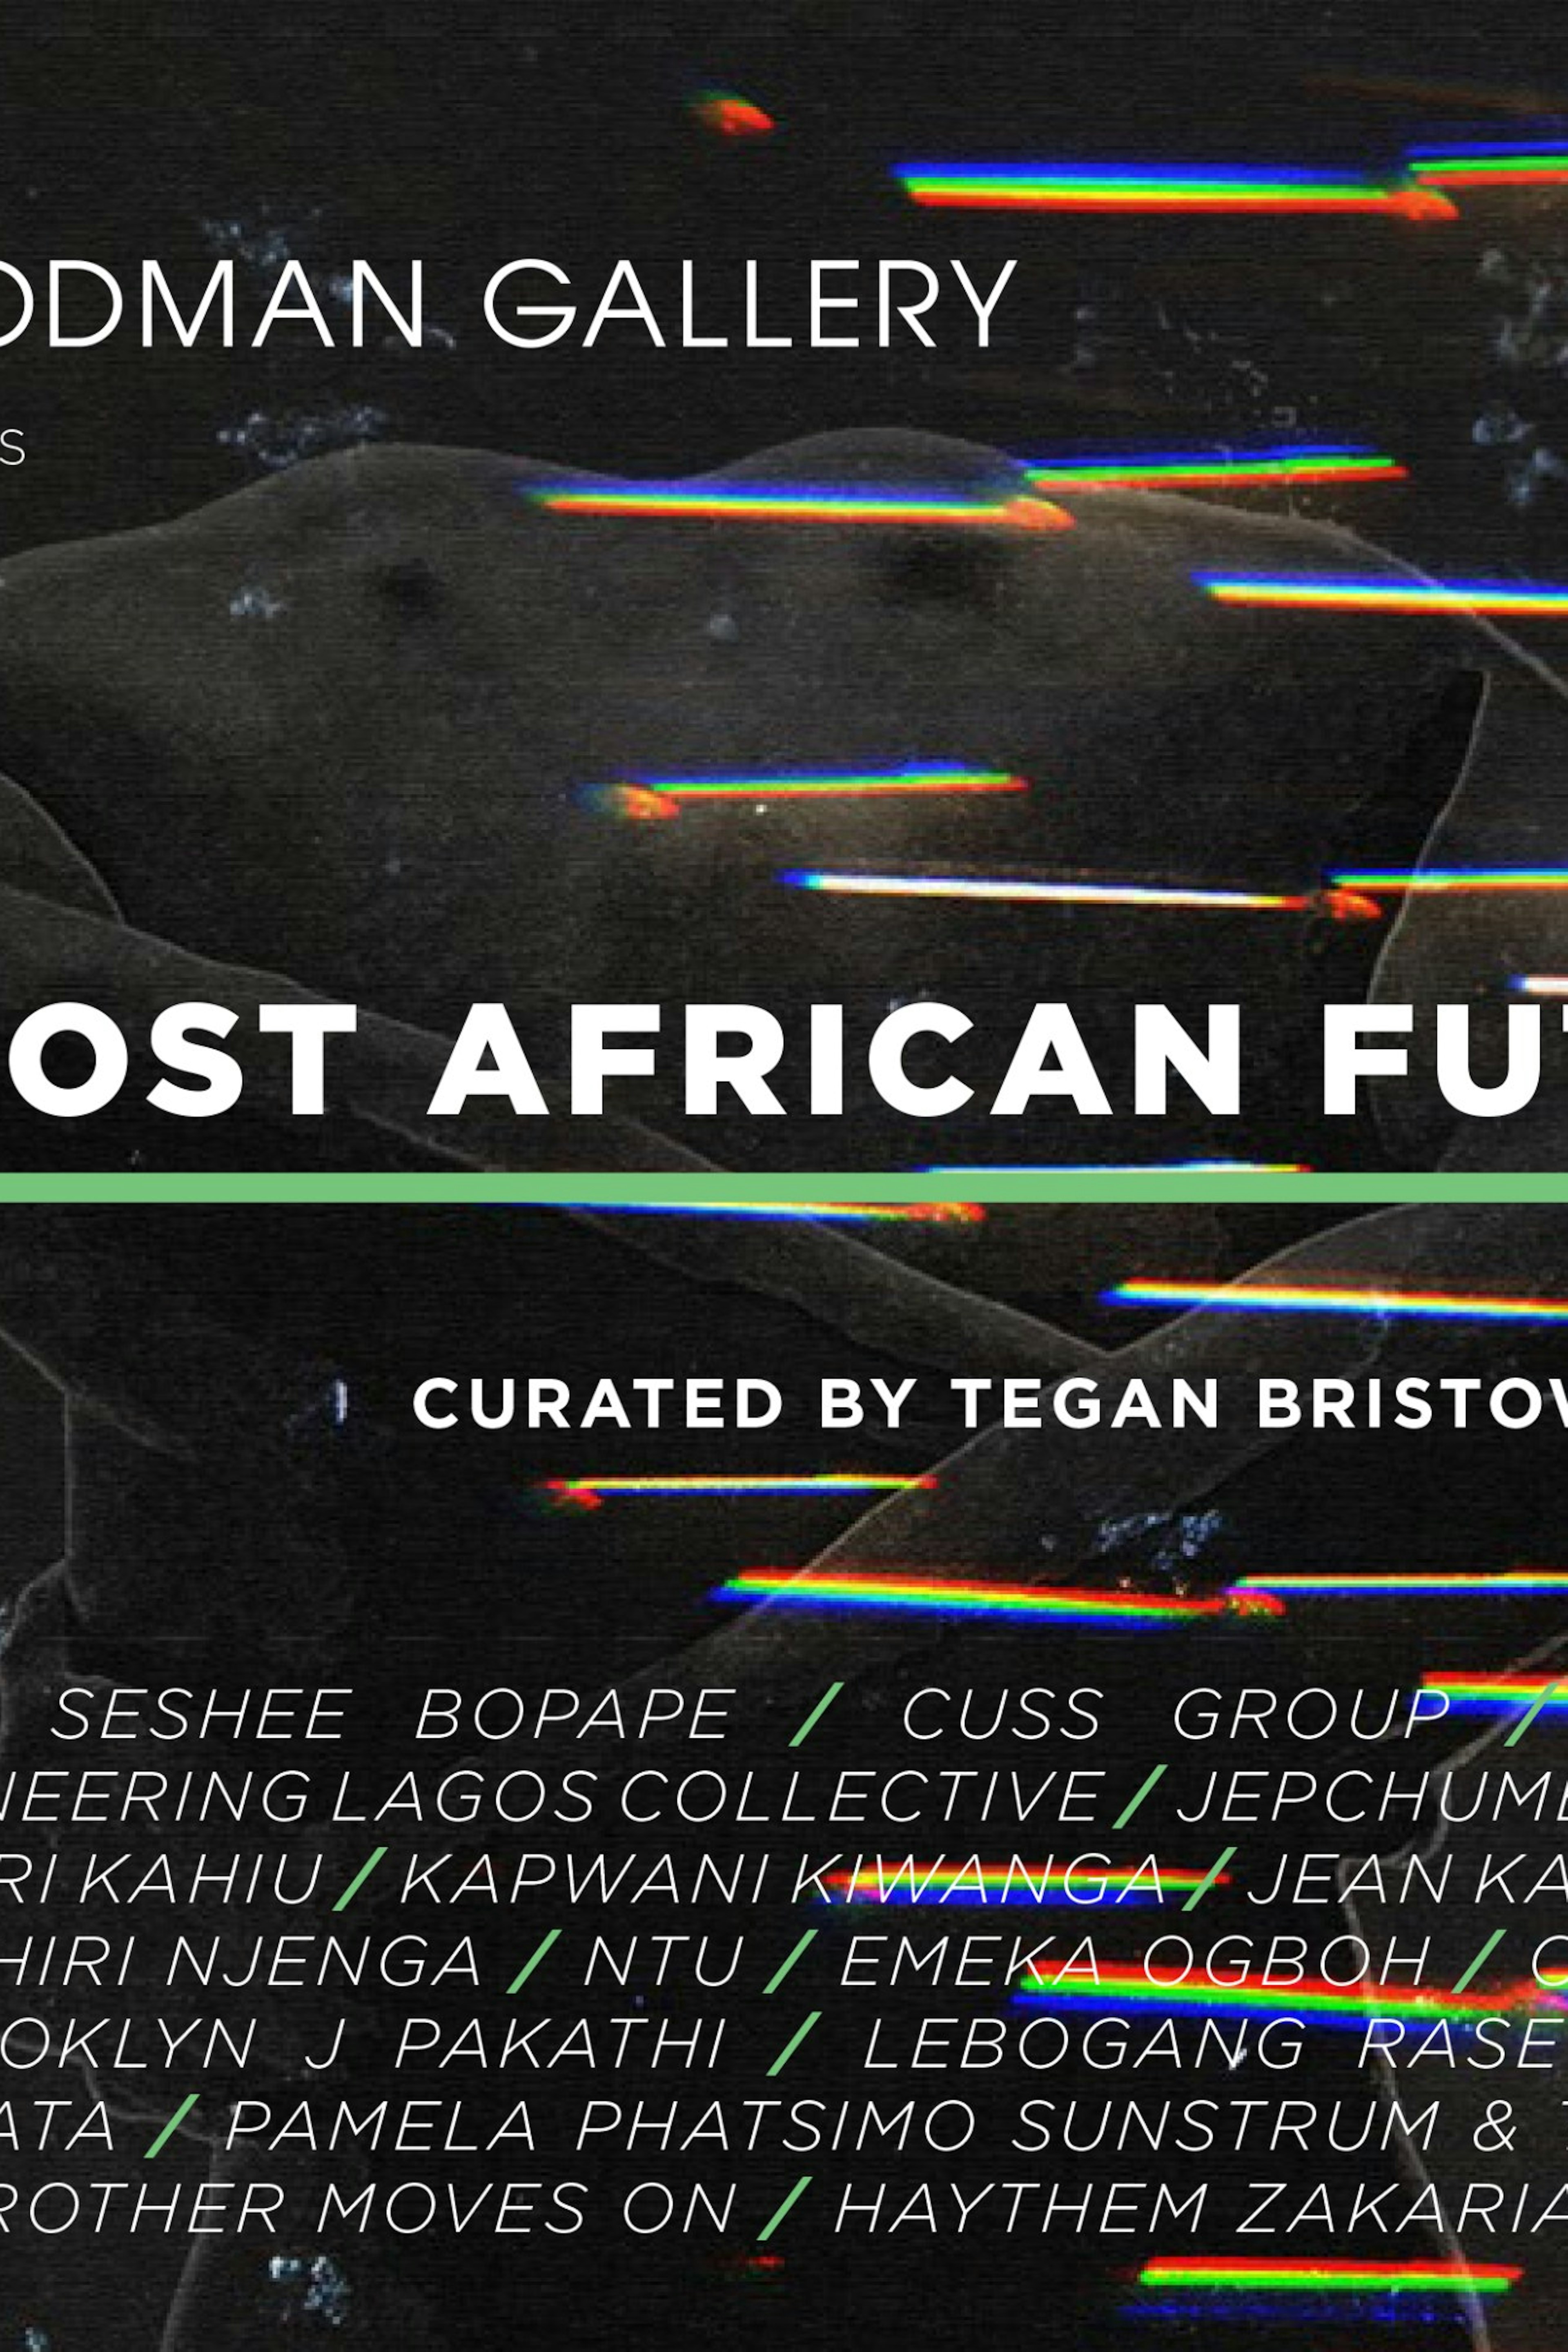 GOODMAN GALLERY: Post African Futures Exhibition